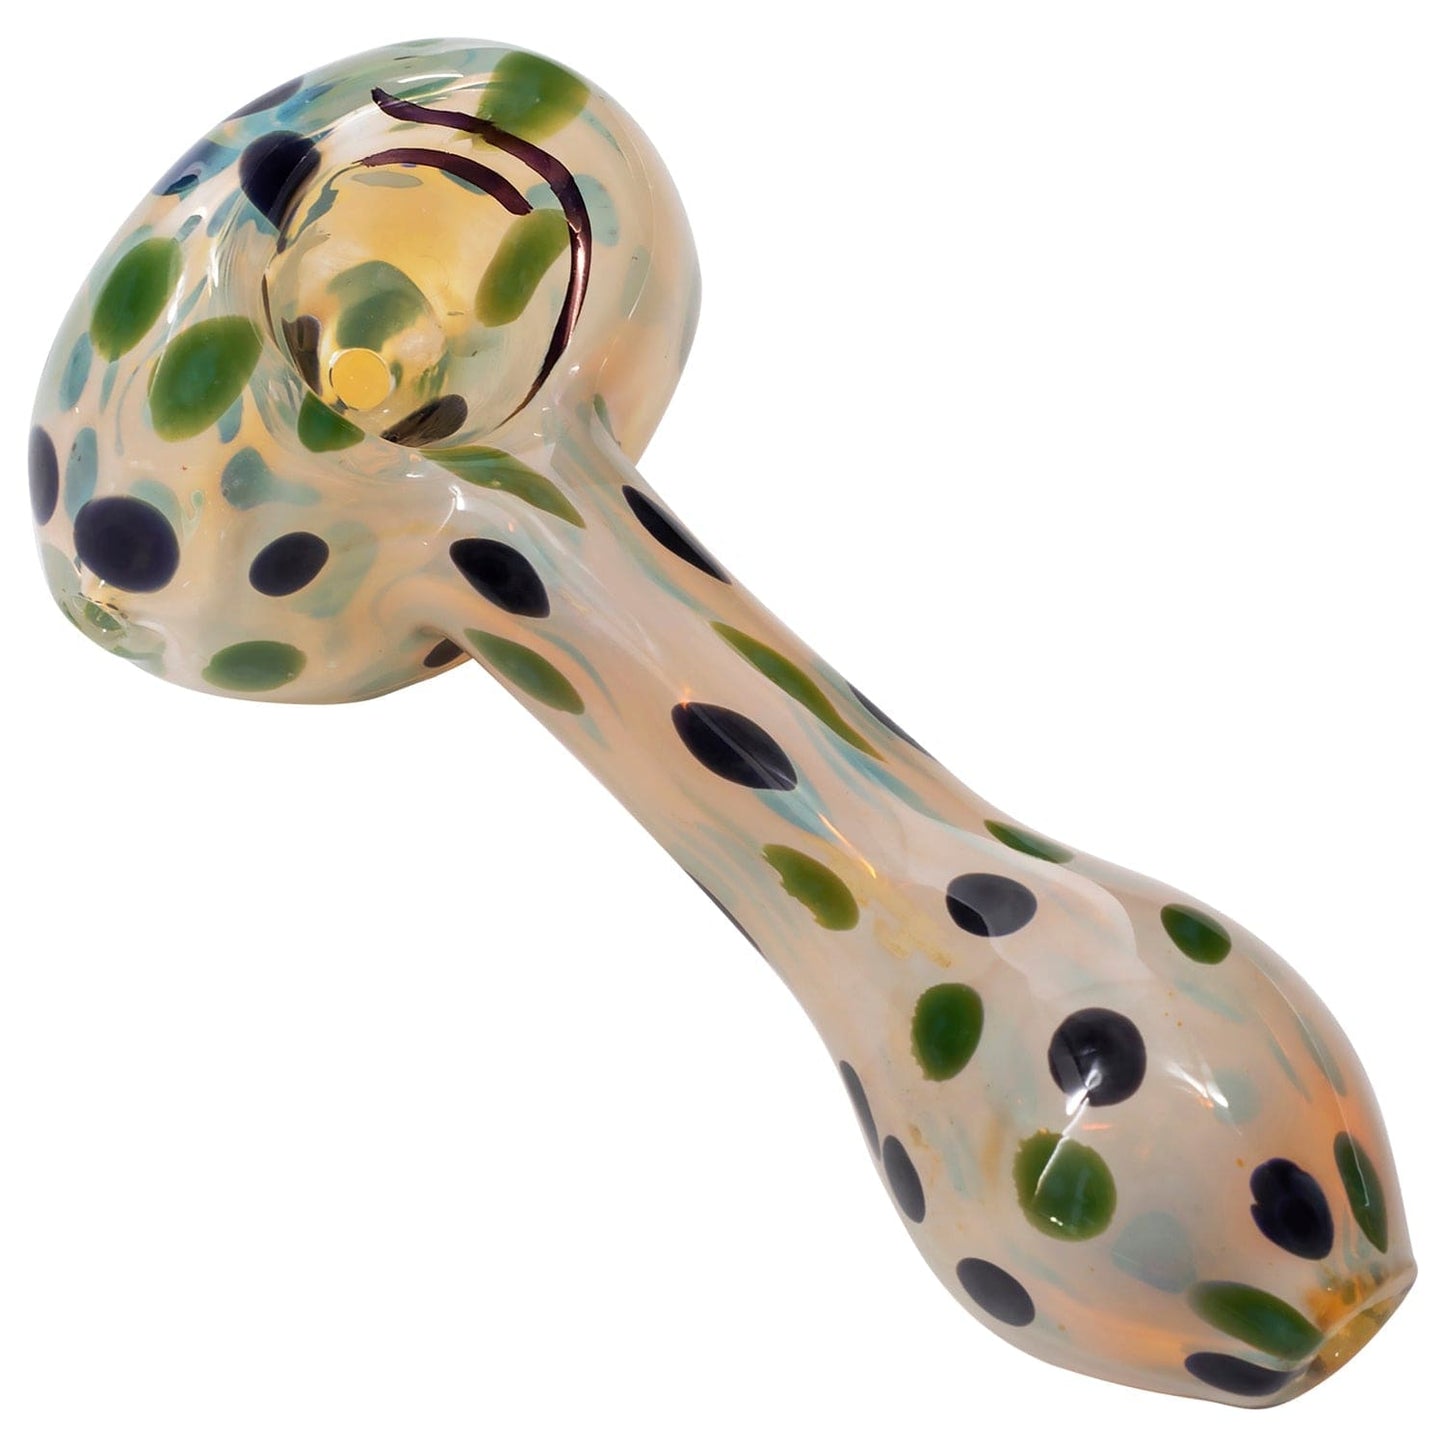 LA Pipes Hand Pipe "Polka Dot" Glass Spoon Pipe